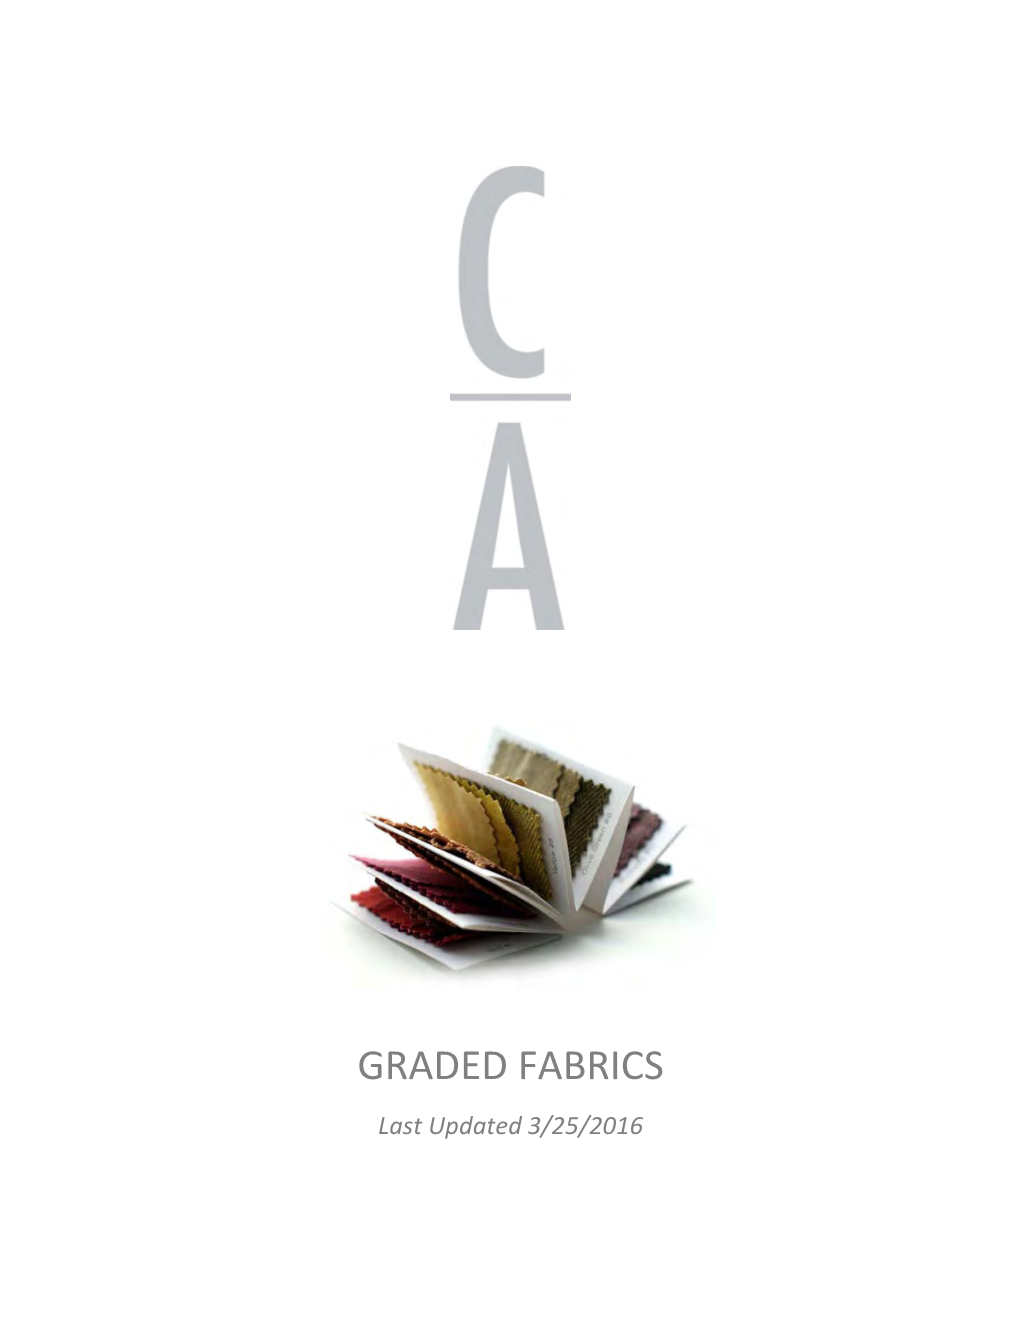 Graded Fabrics